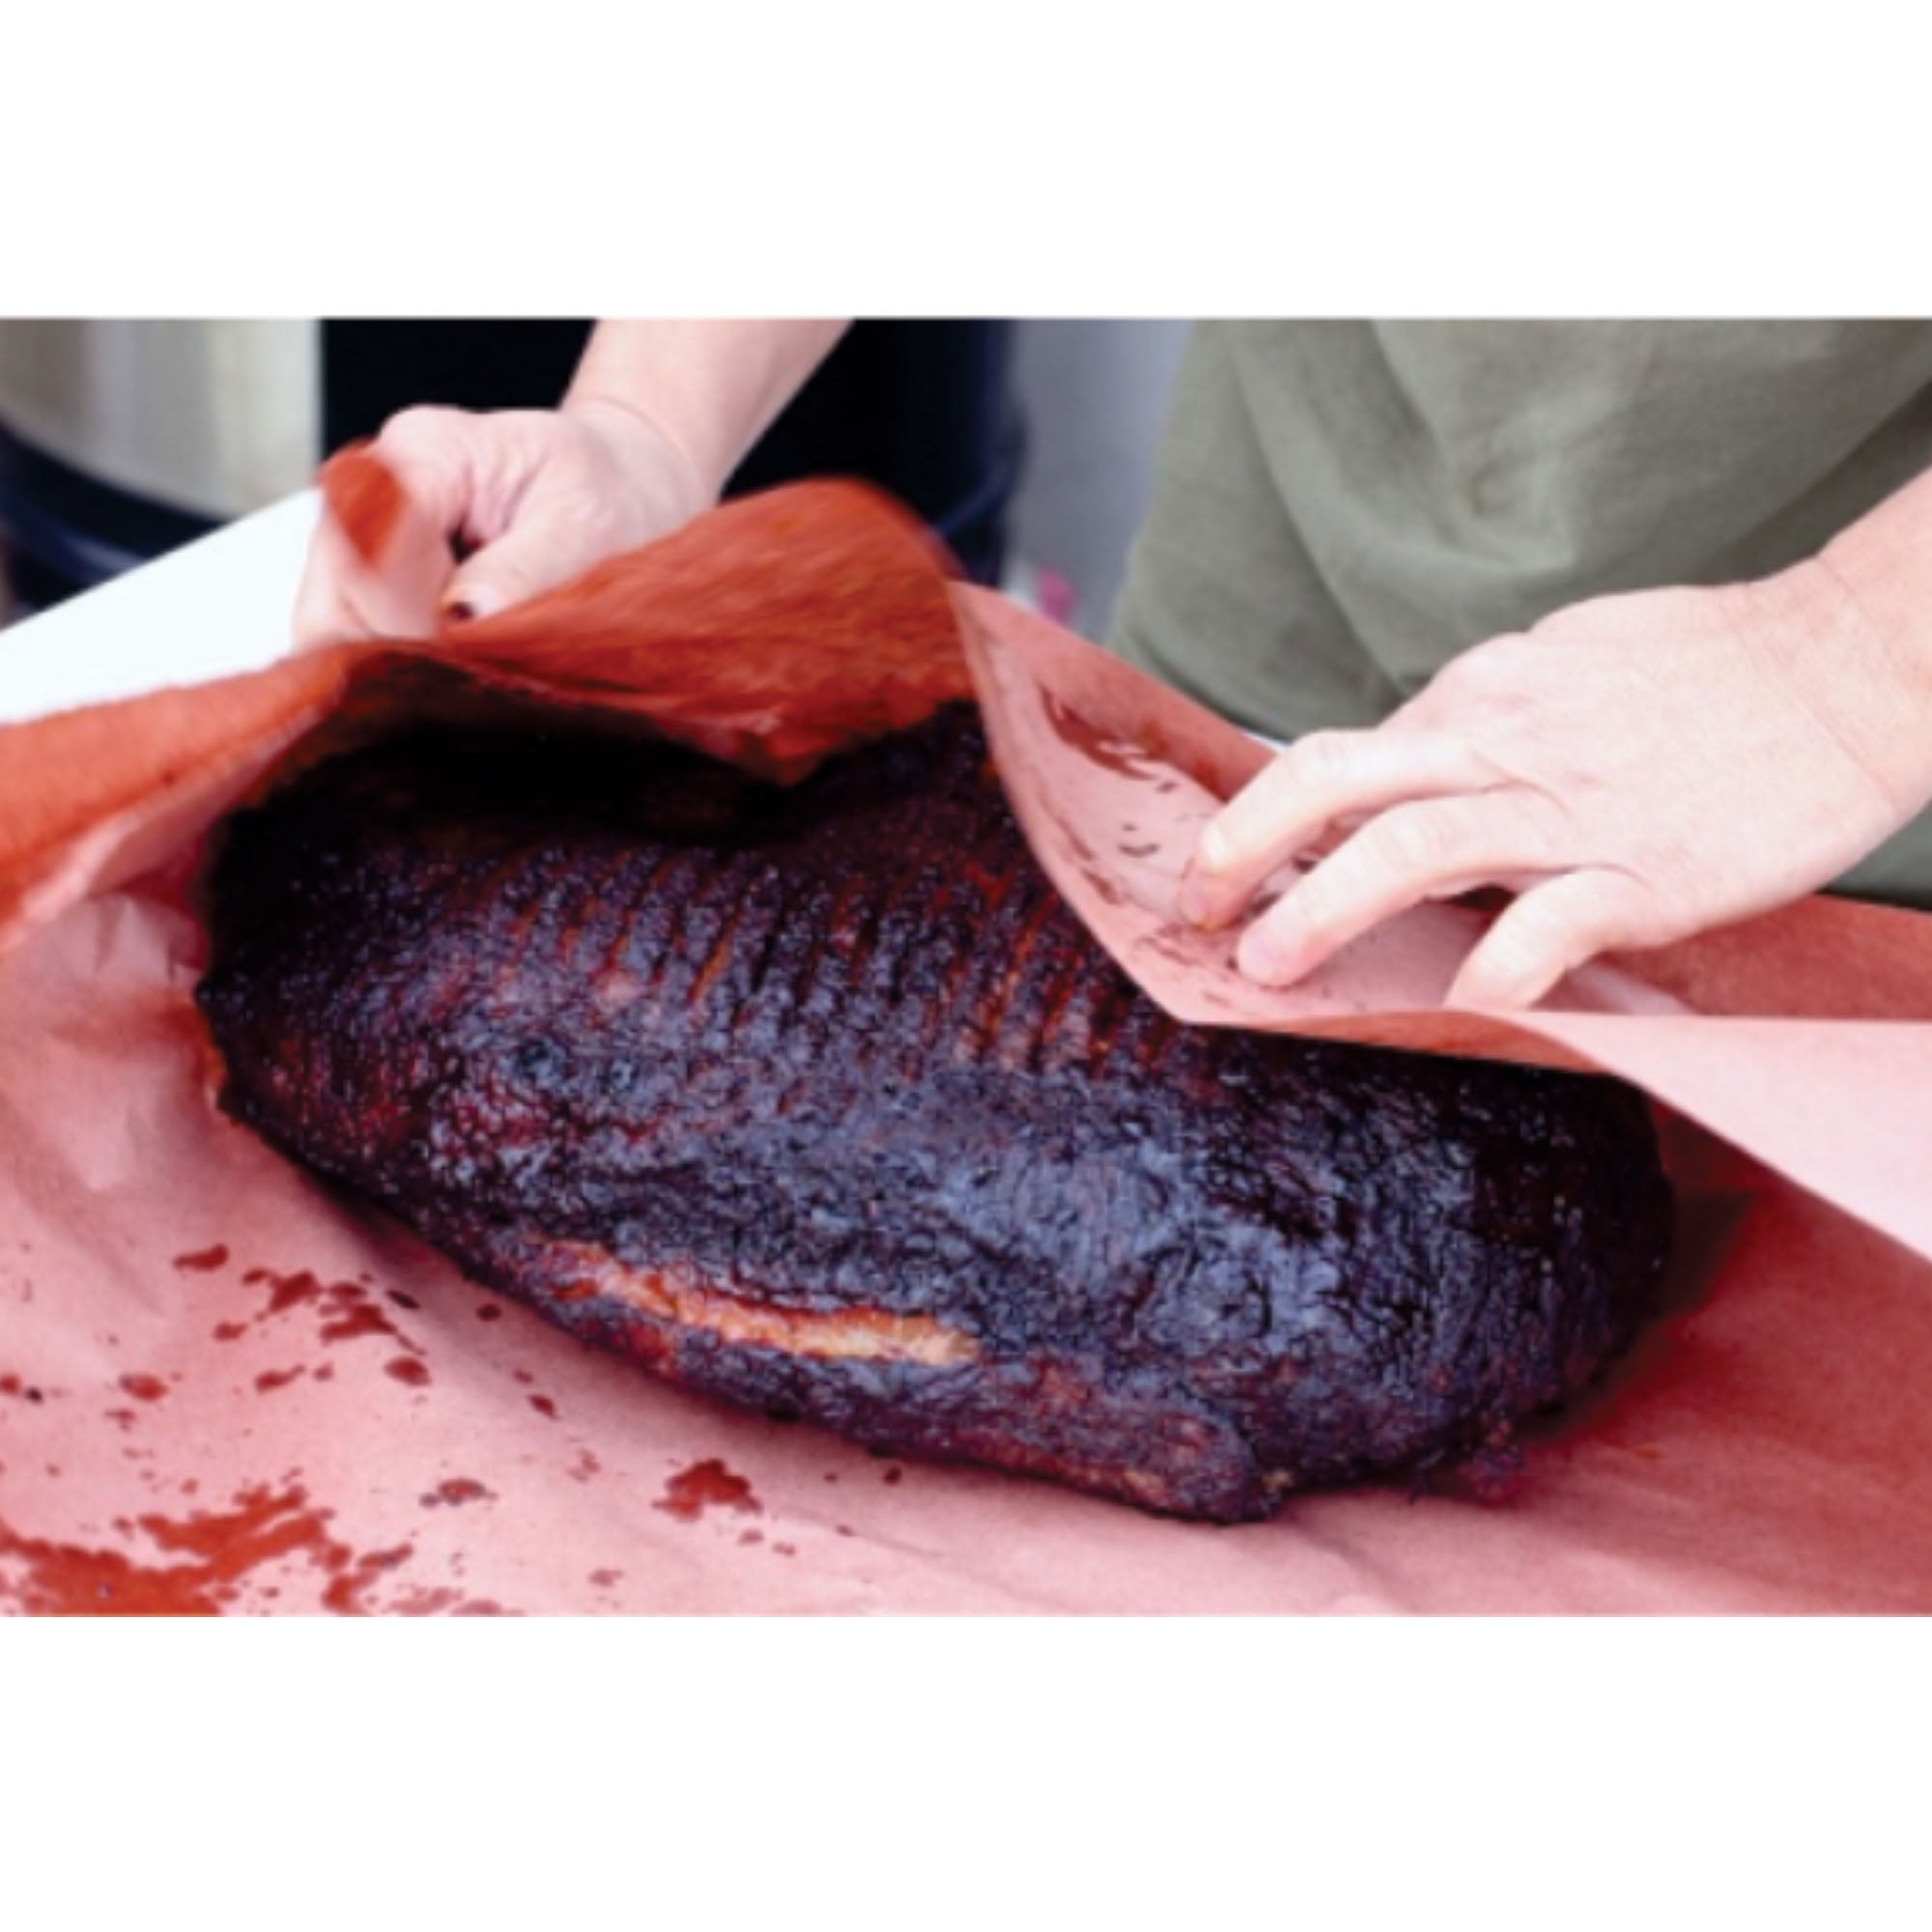 How to use butcher paper.  #brisket#smoker#tuckitrollit#165-175degrees#butcherpaper#wildcountrymeats 